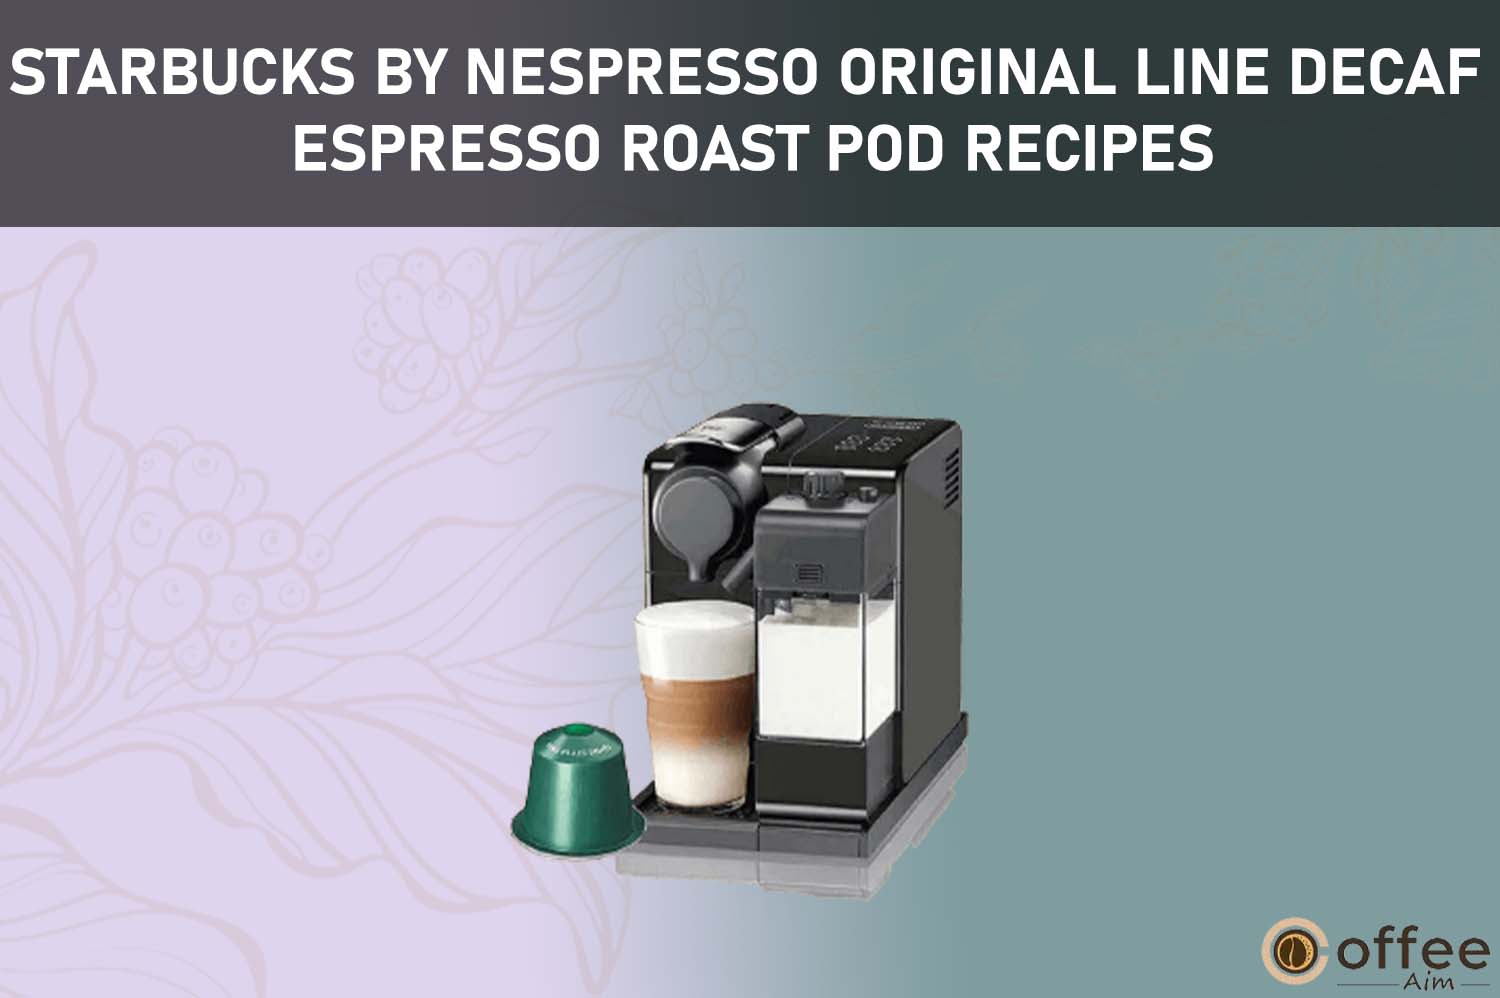 Featured image for the article "Starbucks by Nespresso Original Line Decaf Espresso Roast Pod Recipes"